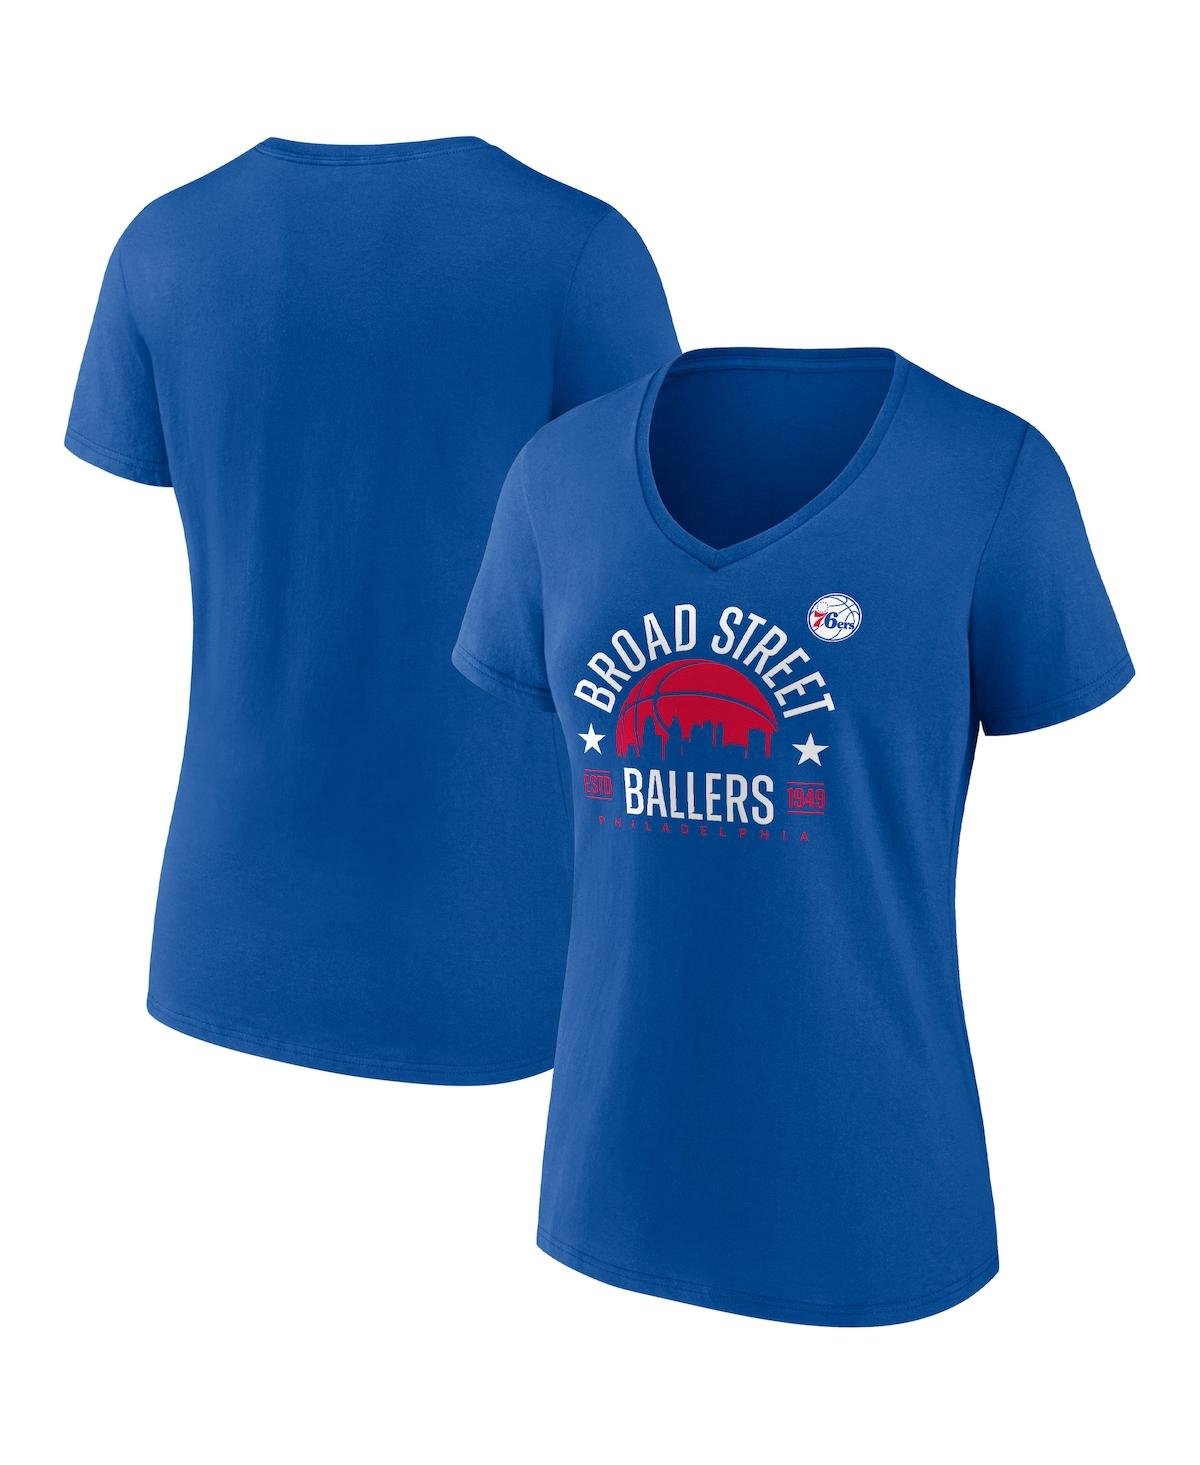 Fanatics Women's  Royal Philadelphia 76ers Hometown Collection Broad Street Ballers V-neck T-shirt